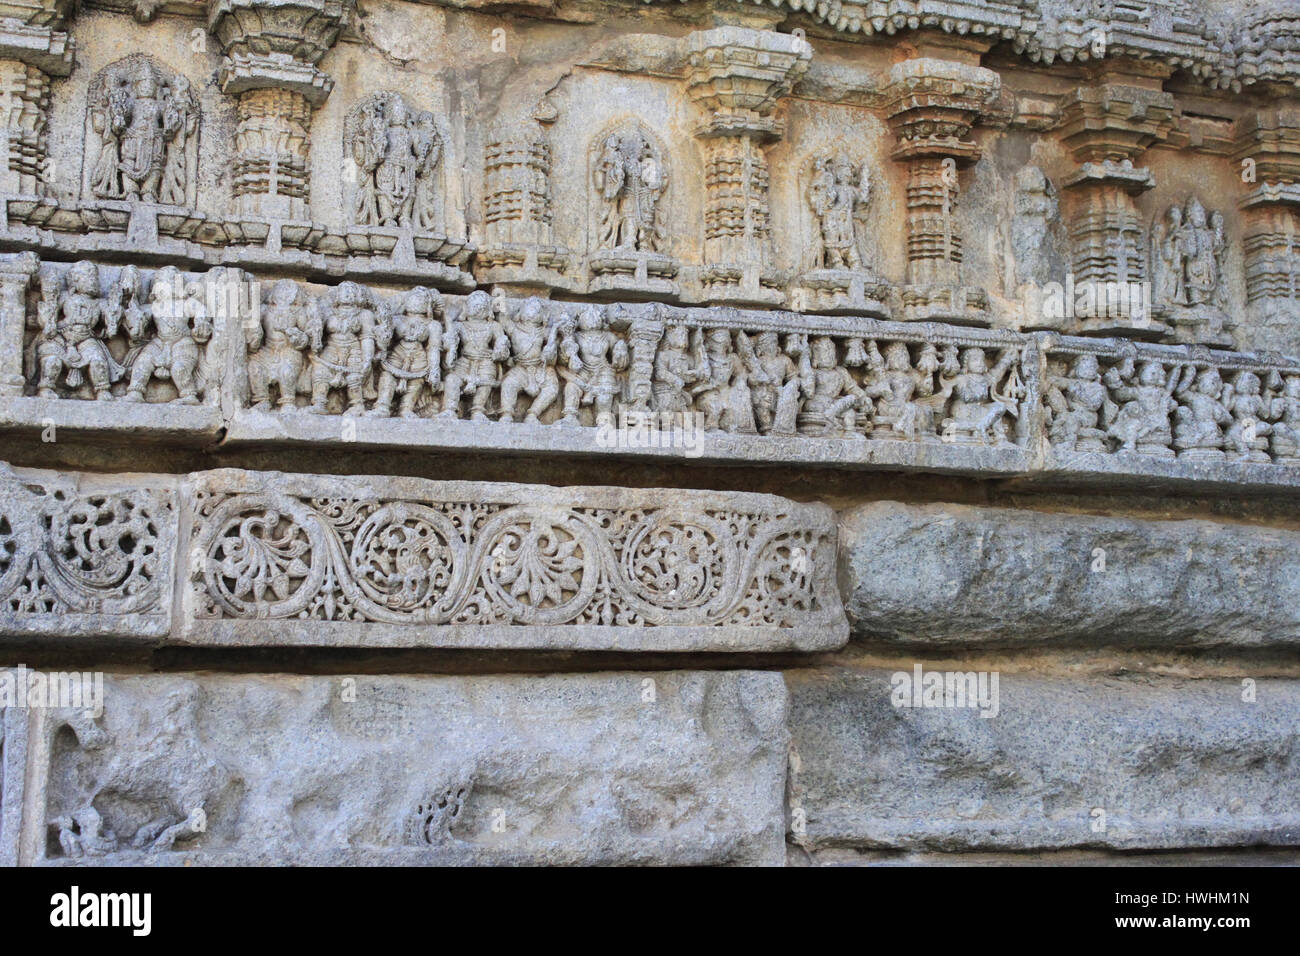 Detailed stone carving, wall relief, sculptures at Chennakesava Temple, Hoysala Architecture, Somanathpur, Karnataka, India Stock Photo